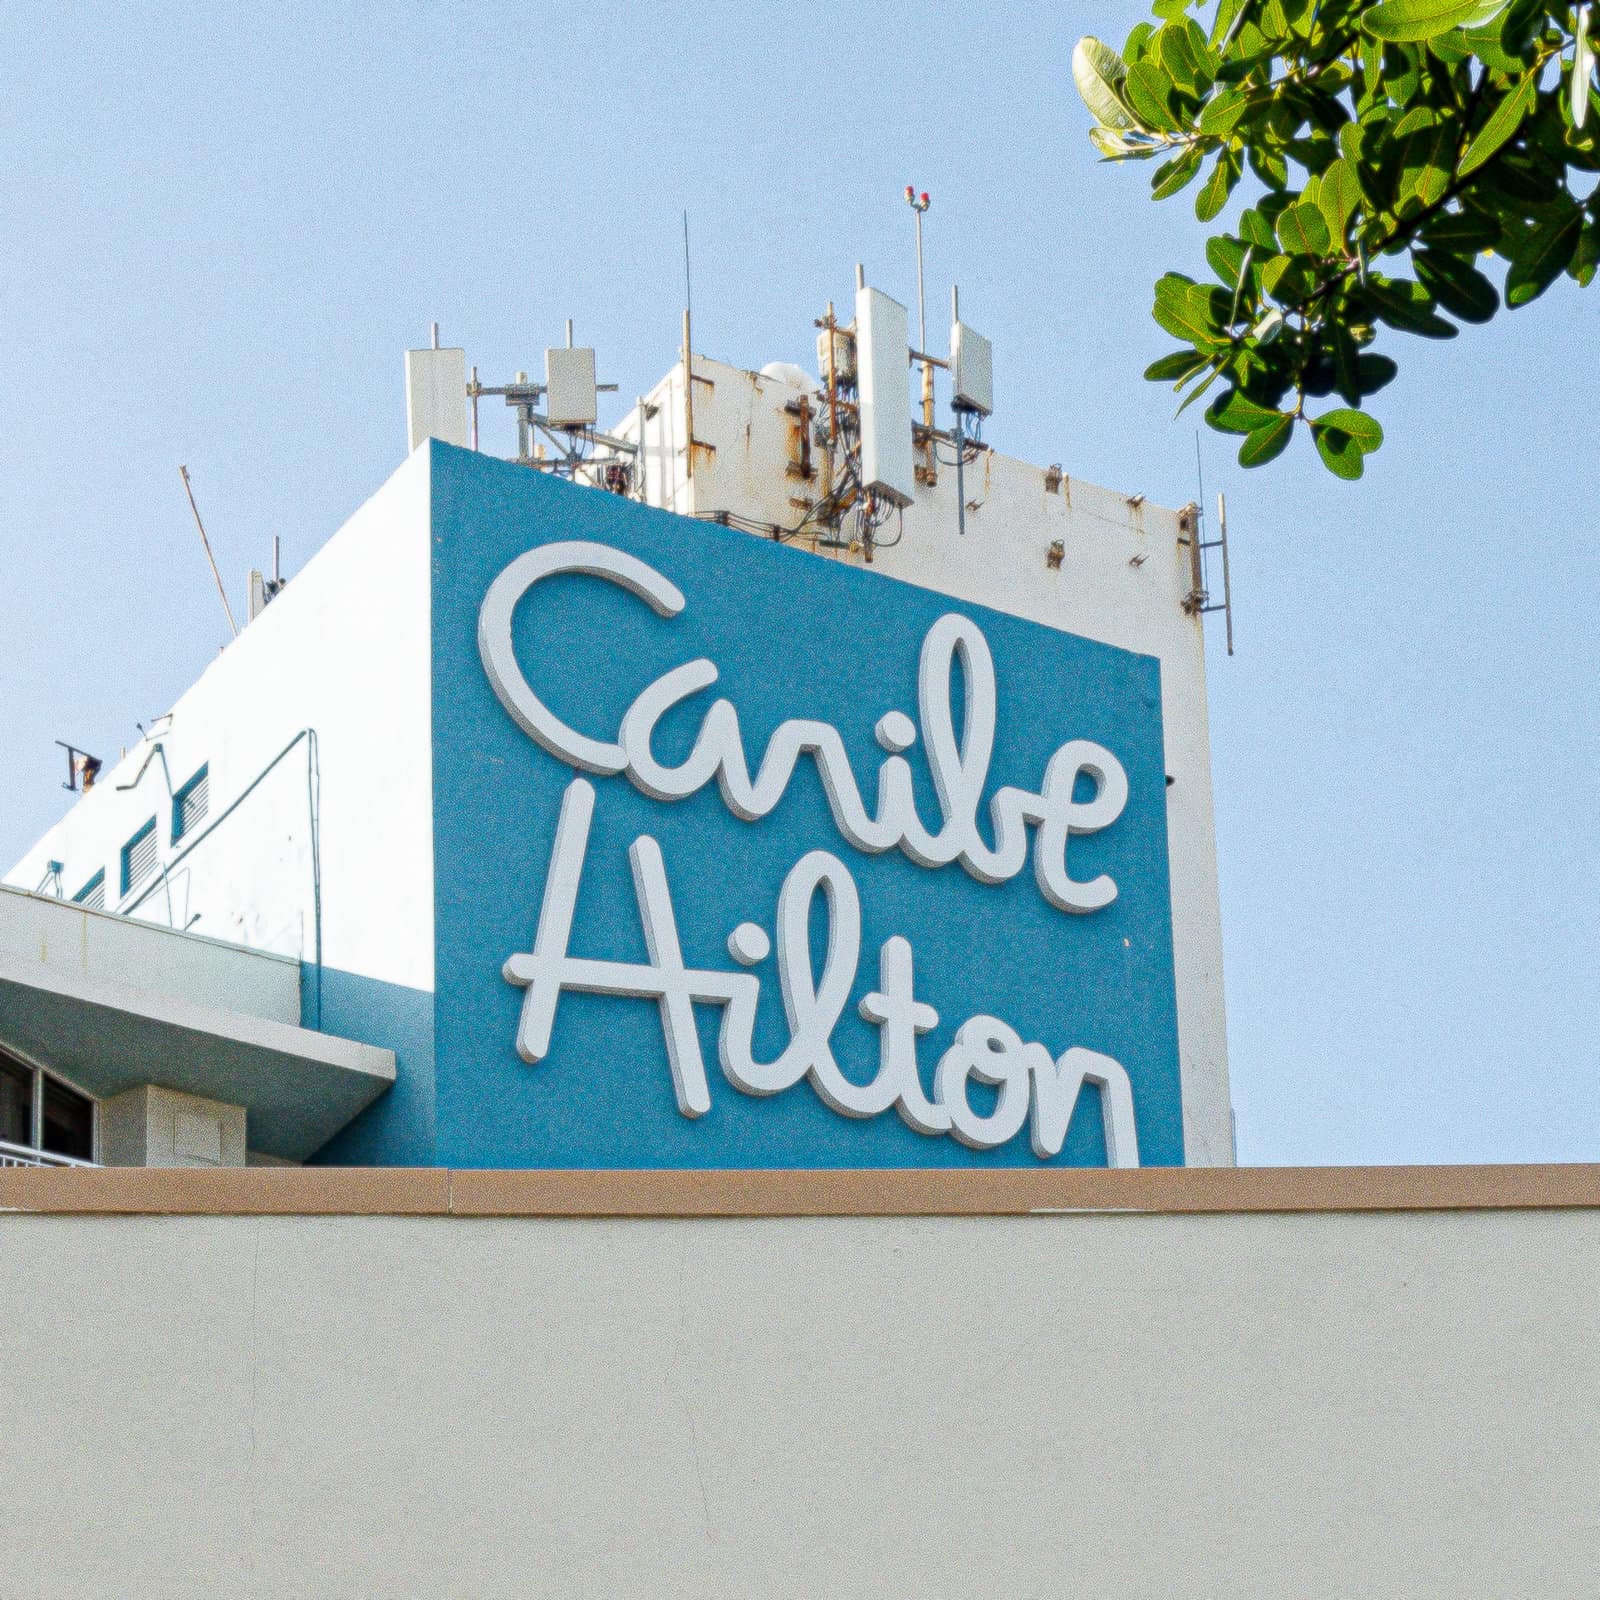 hilton hotel sign